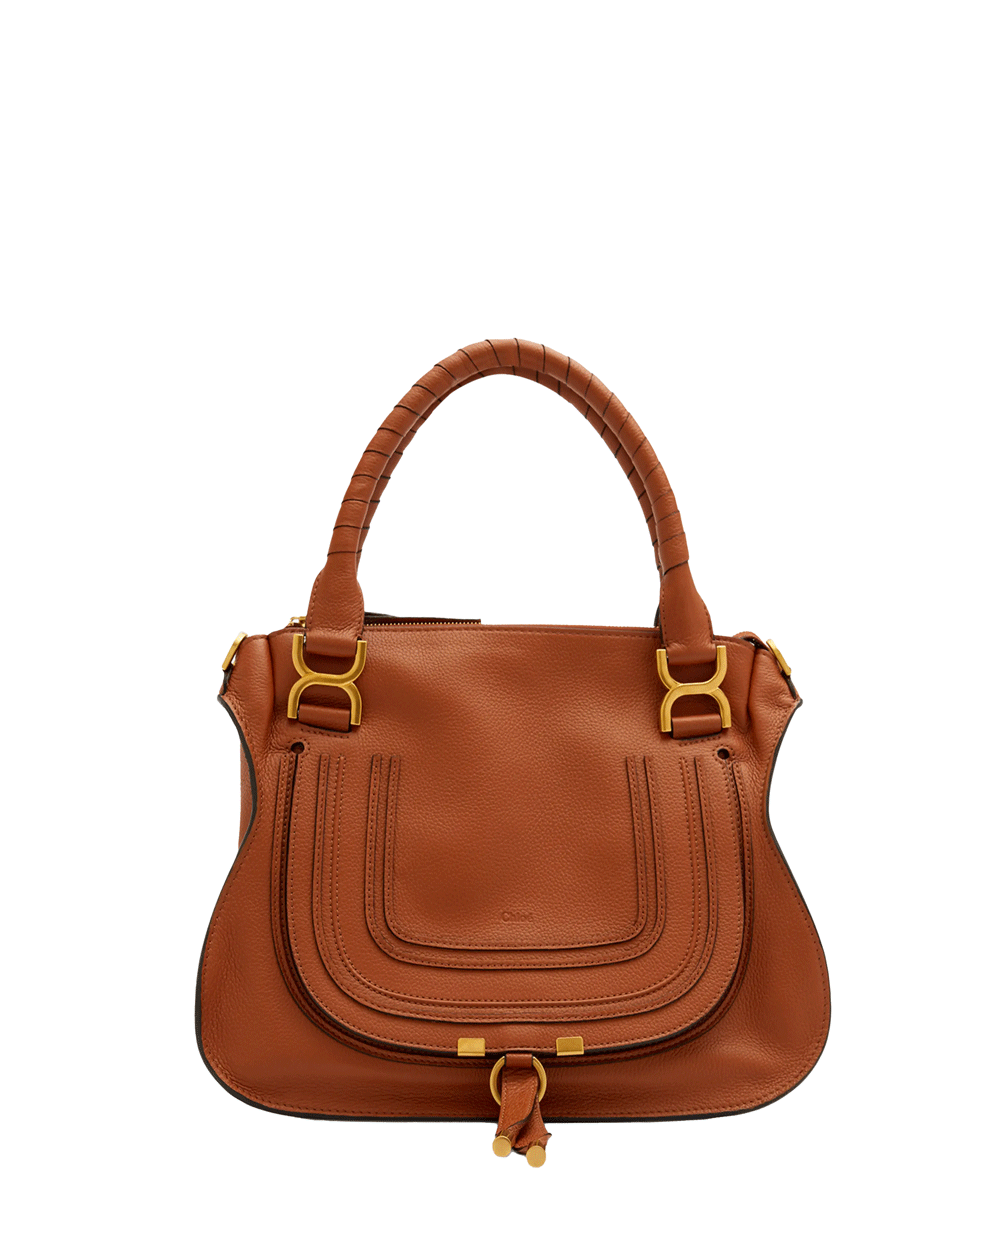 Marcie Medium Bag in Tan